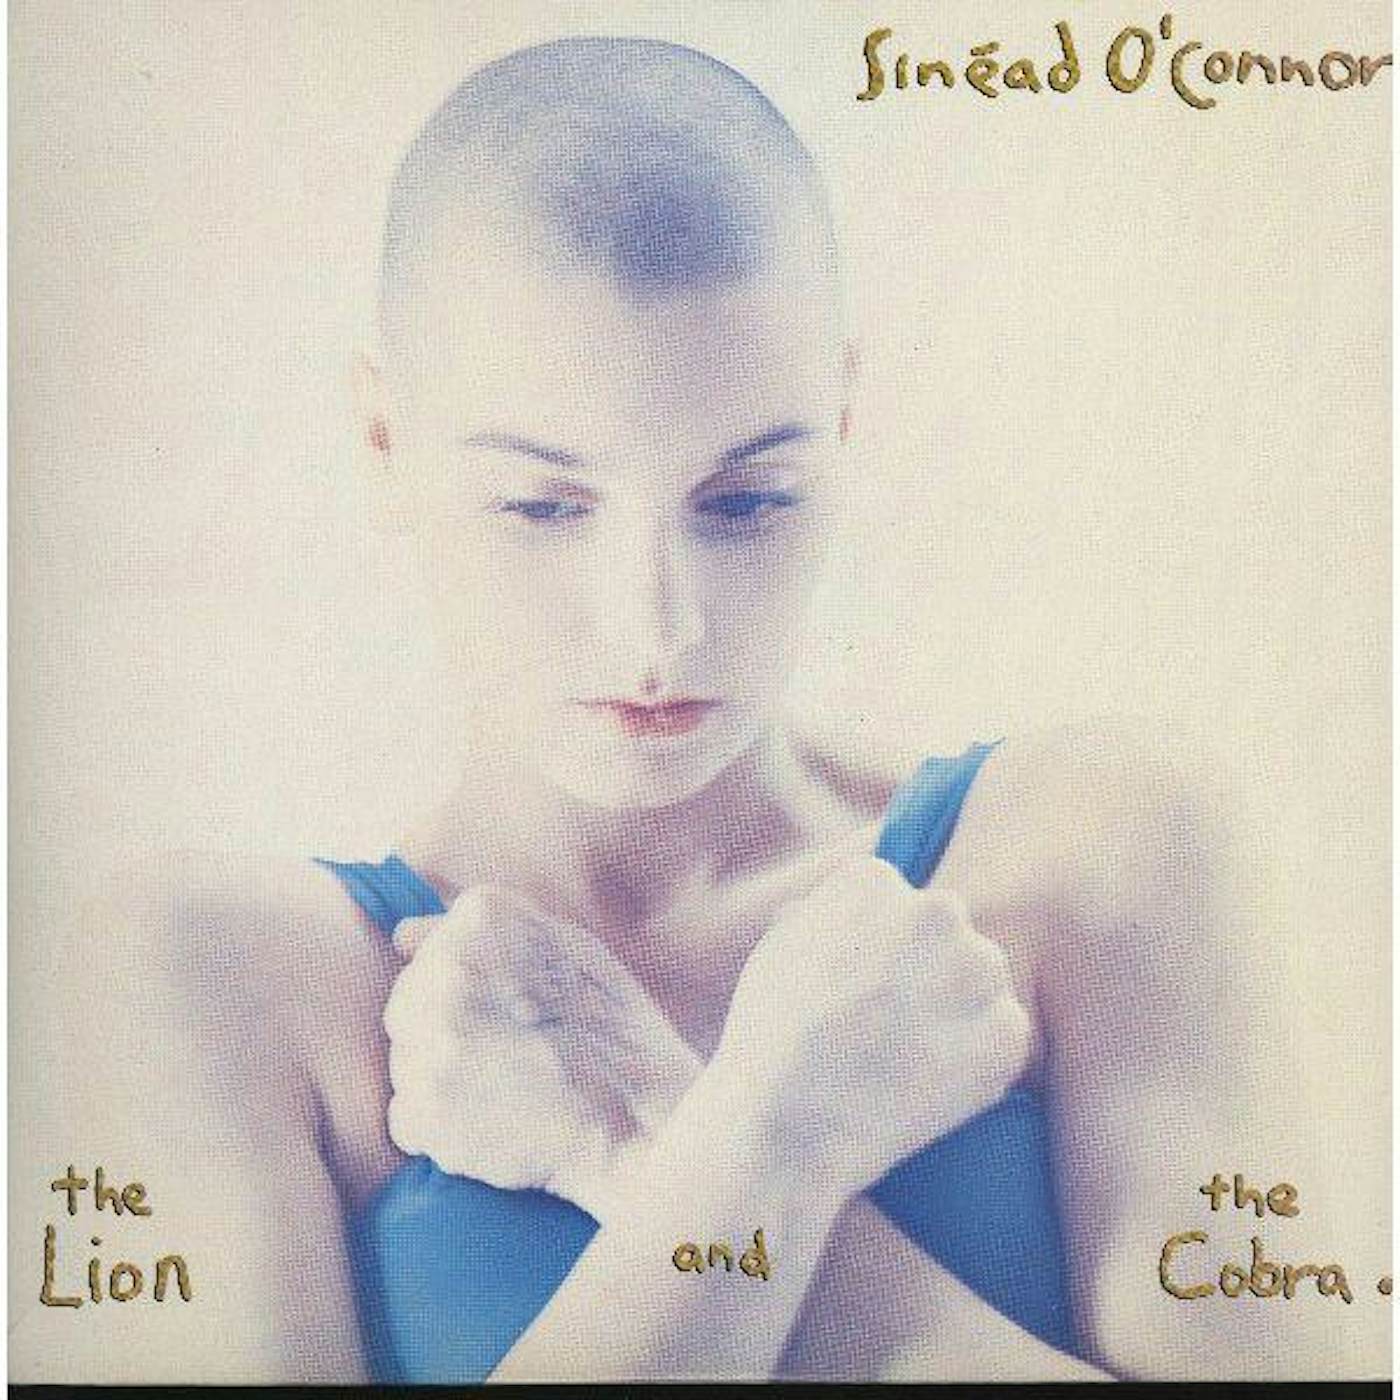 Sinéad O'Connor Lion & The Cobra Vinyl Record